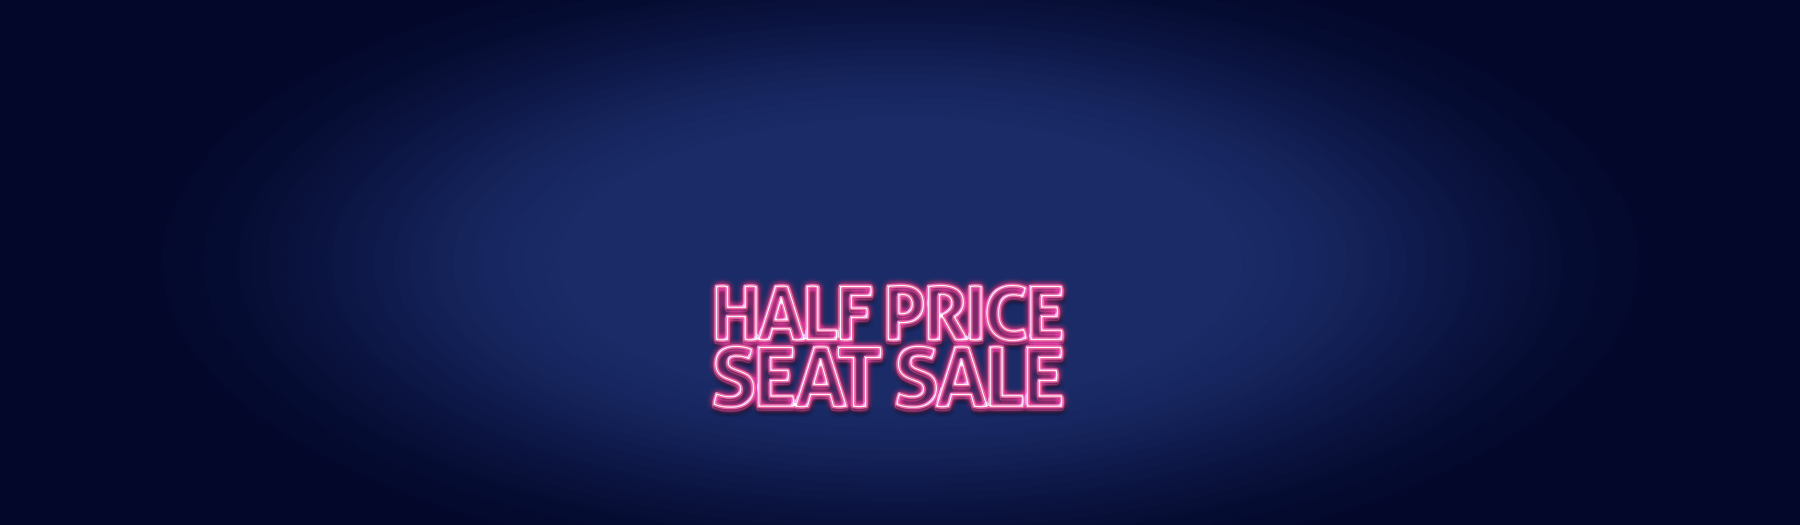 Half price seat sale